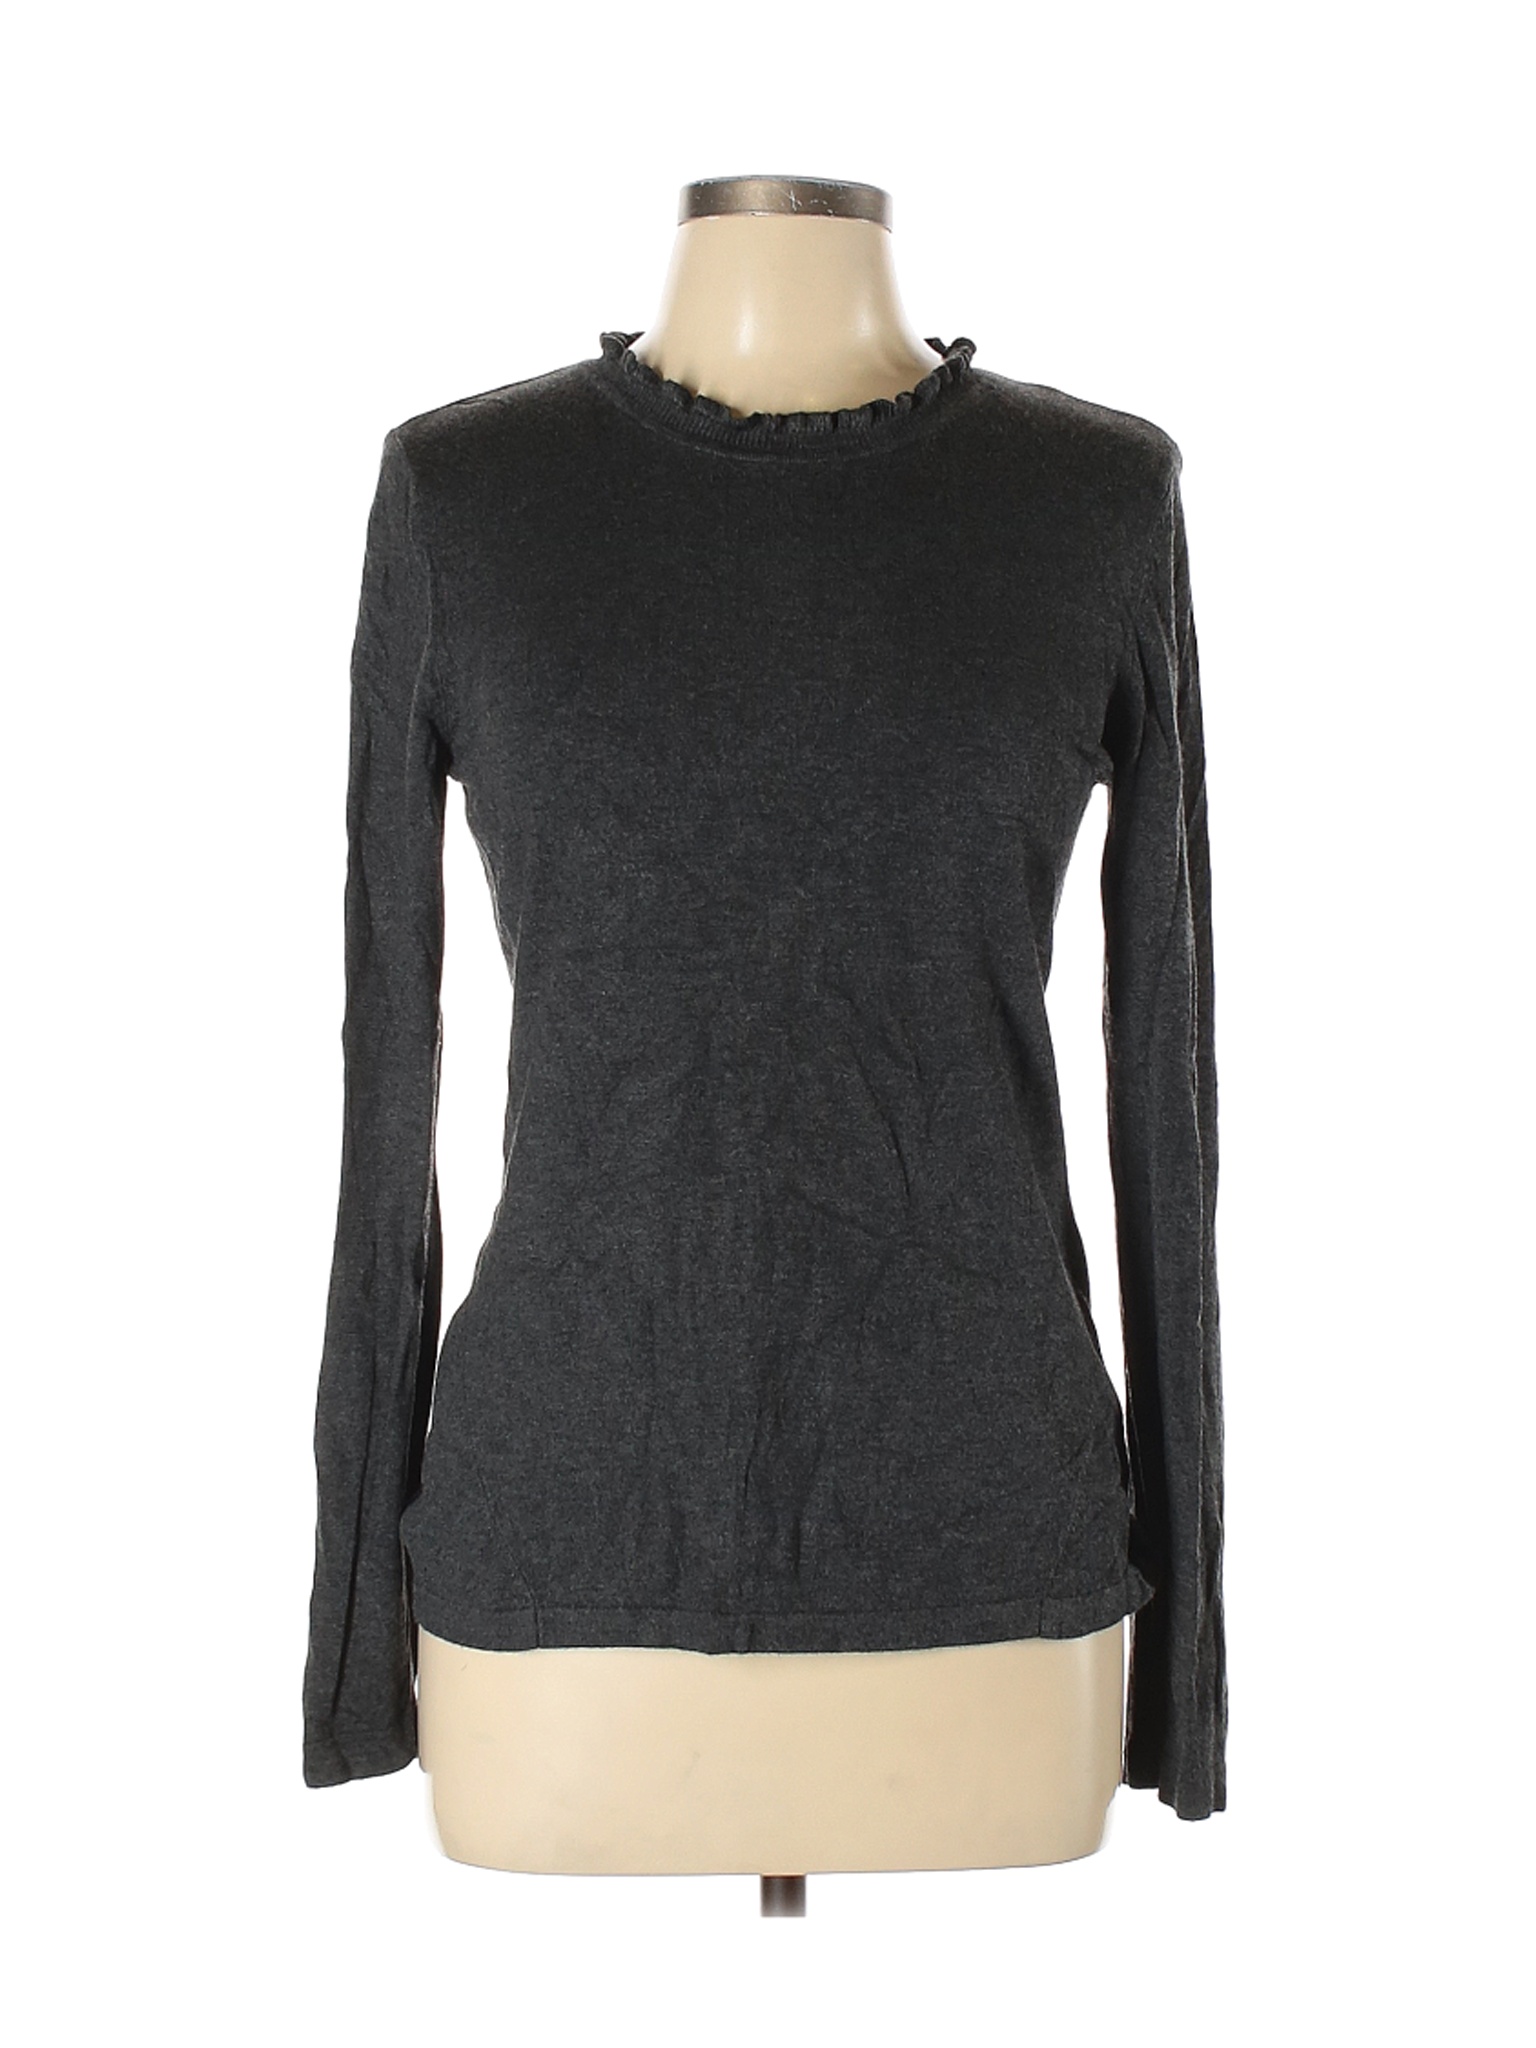 PREMISE Women Gray Pullover Sweater L | eBay